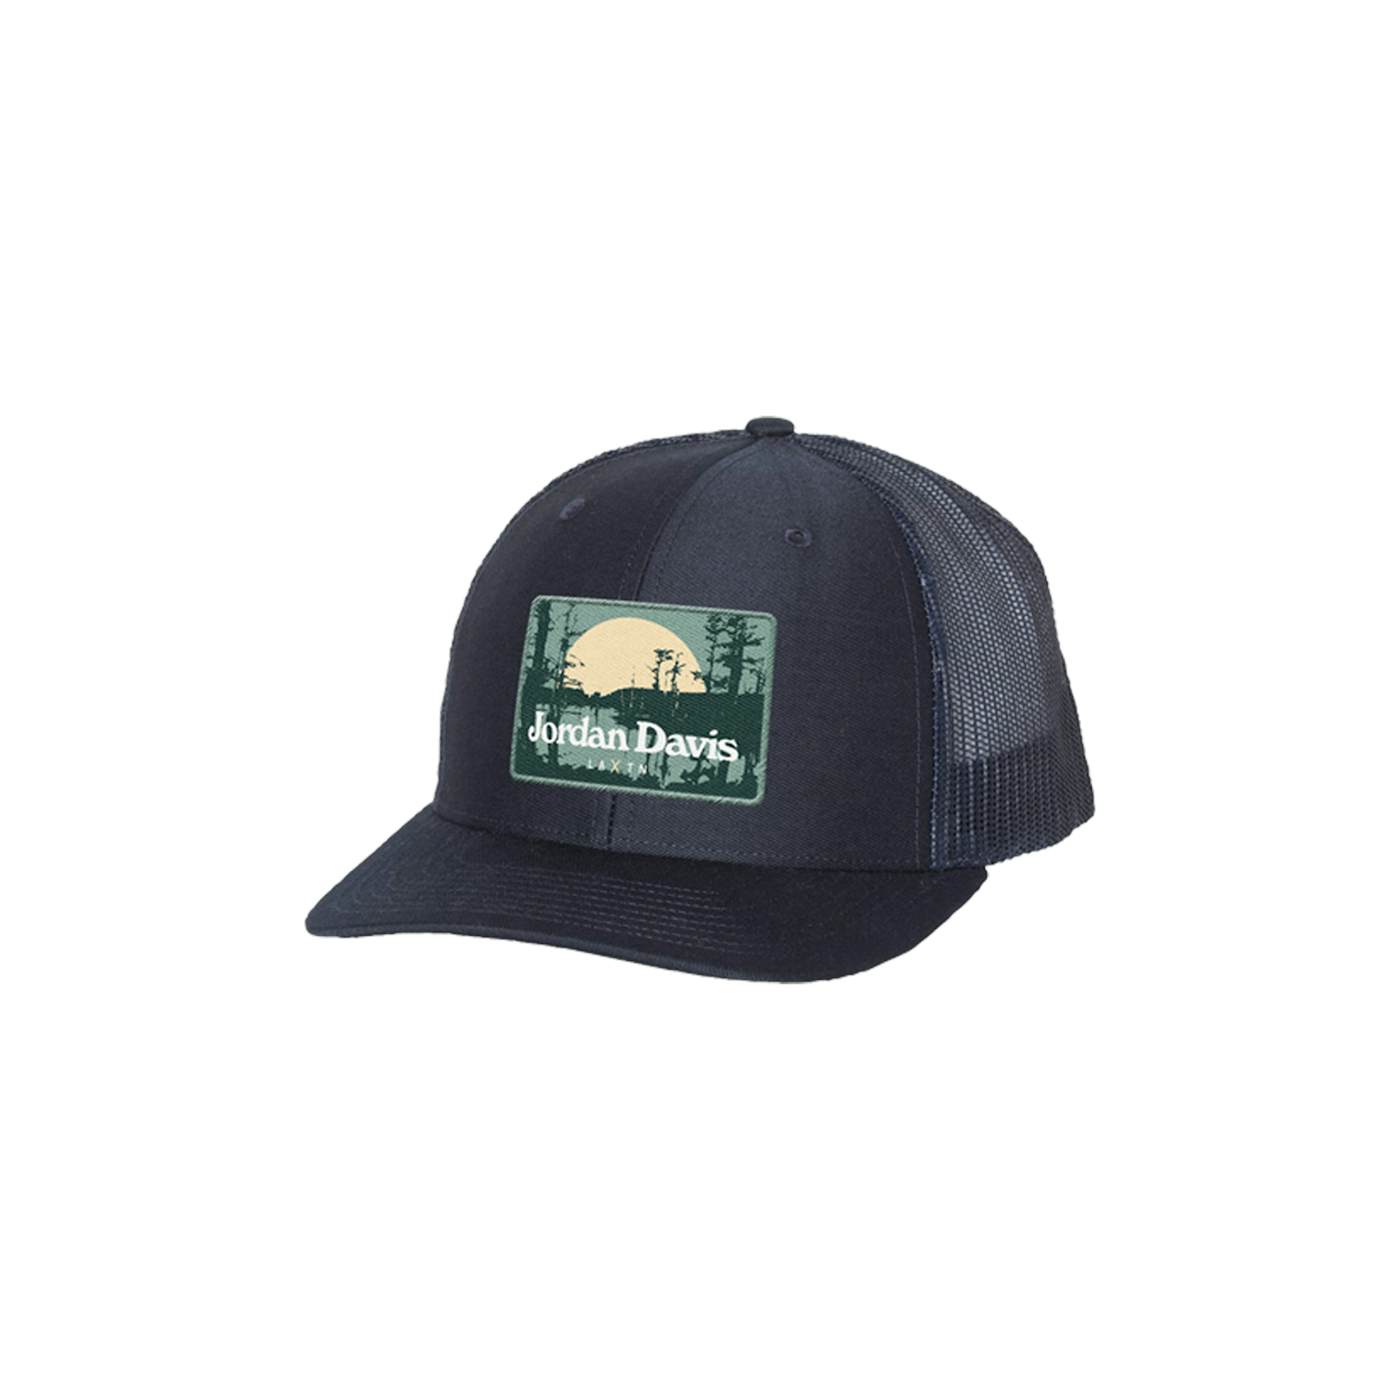 Jordan Davis Bayou Patch Trucker Hat